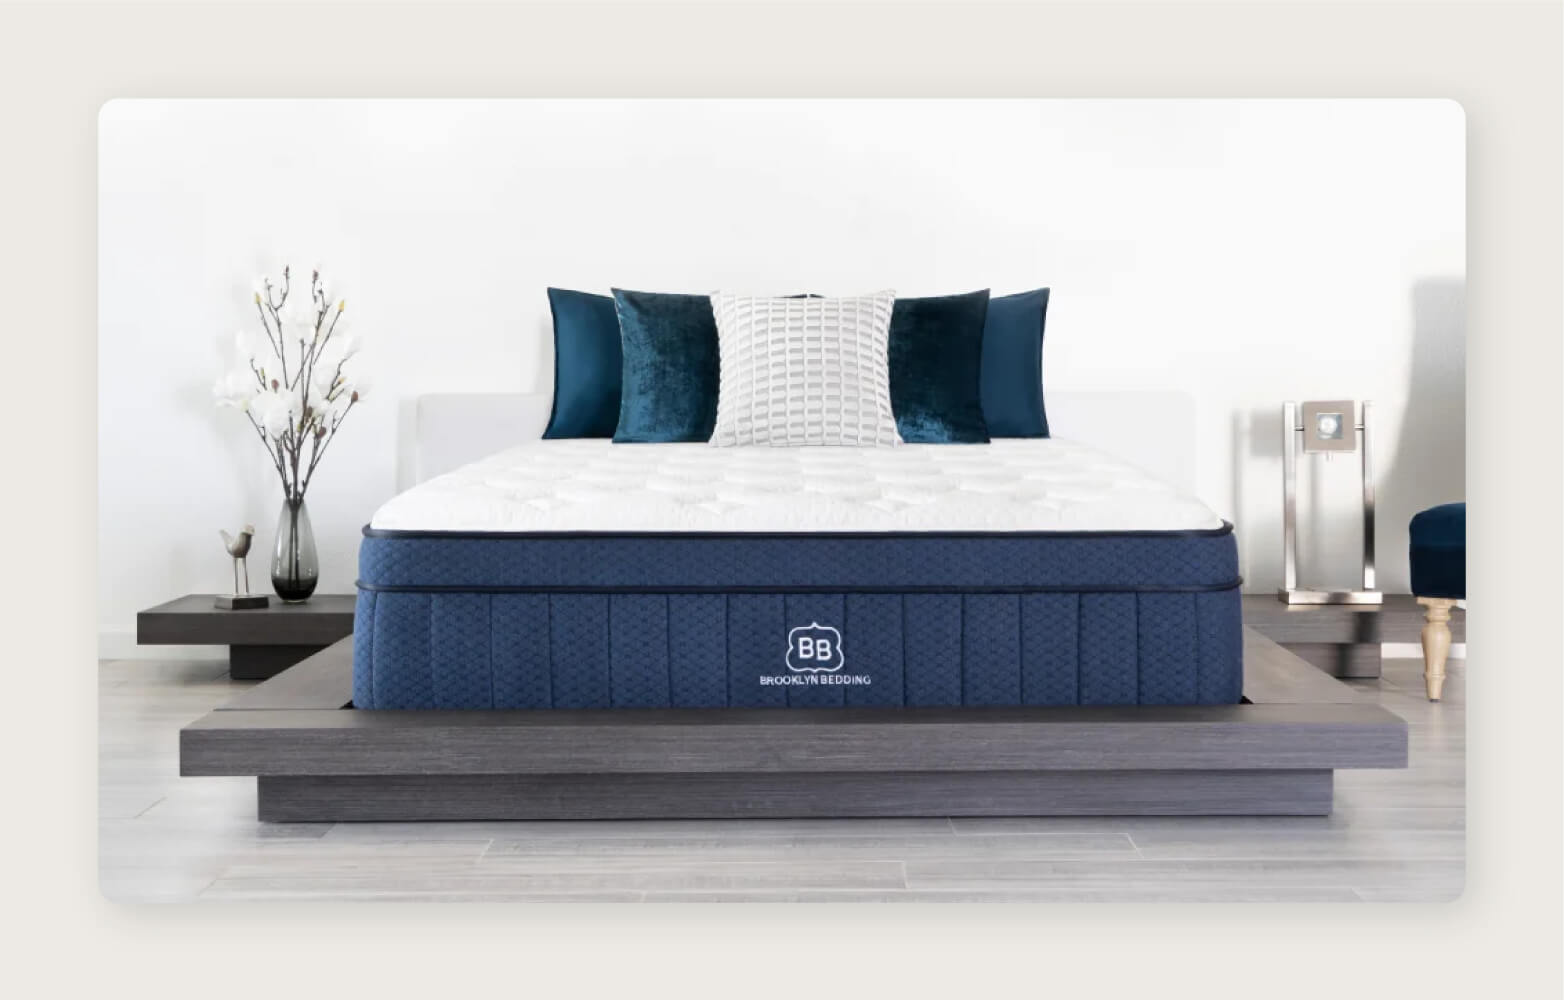 A blue Brooklyn Bedding Aurora Luxe mattress with throw pillows on a dark, low platform frame.